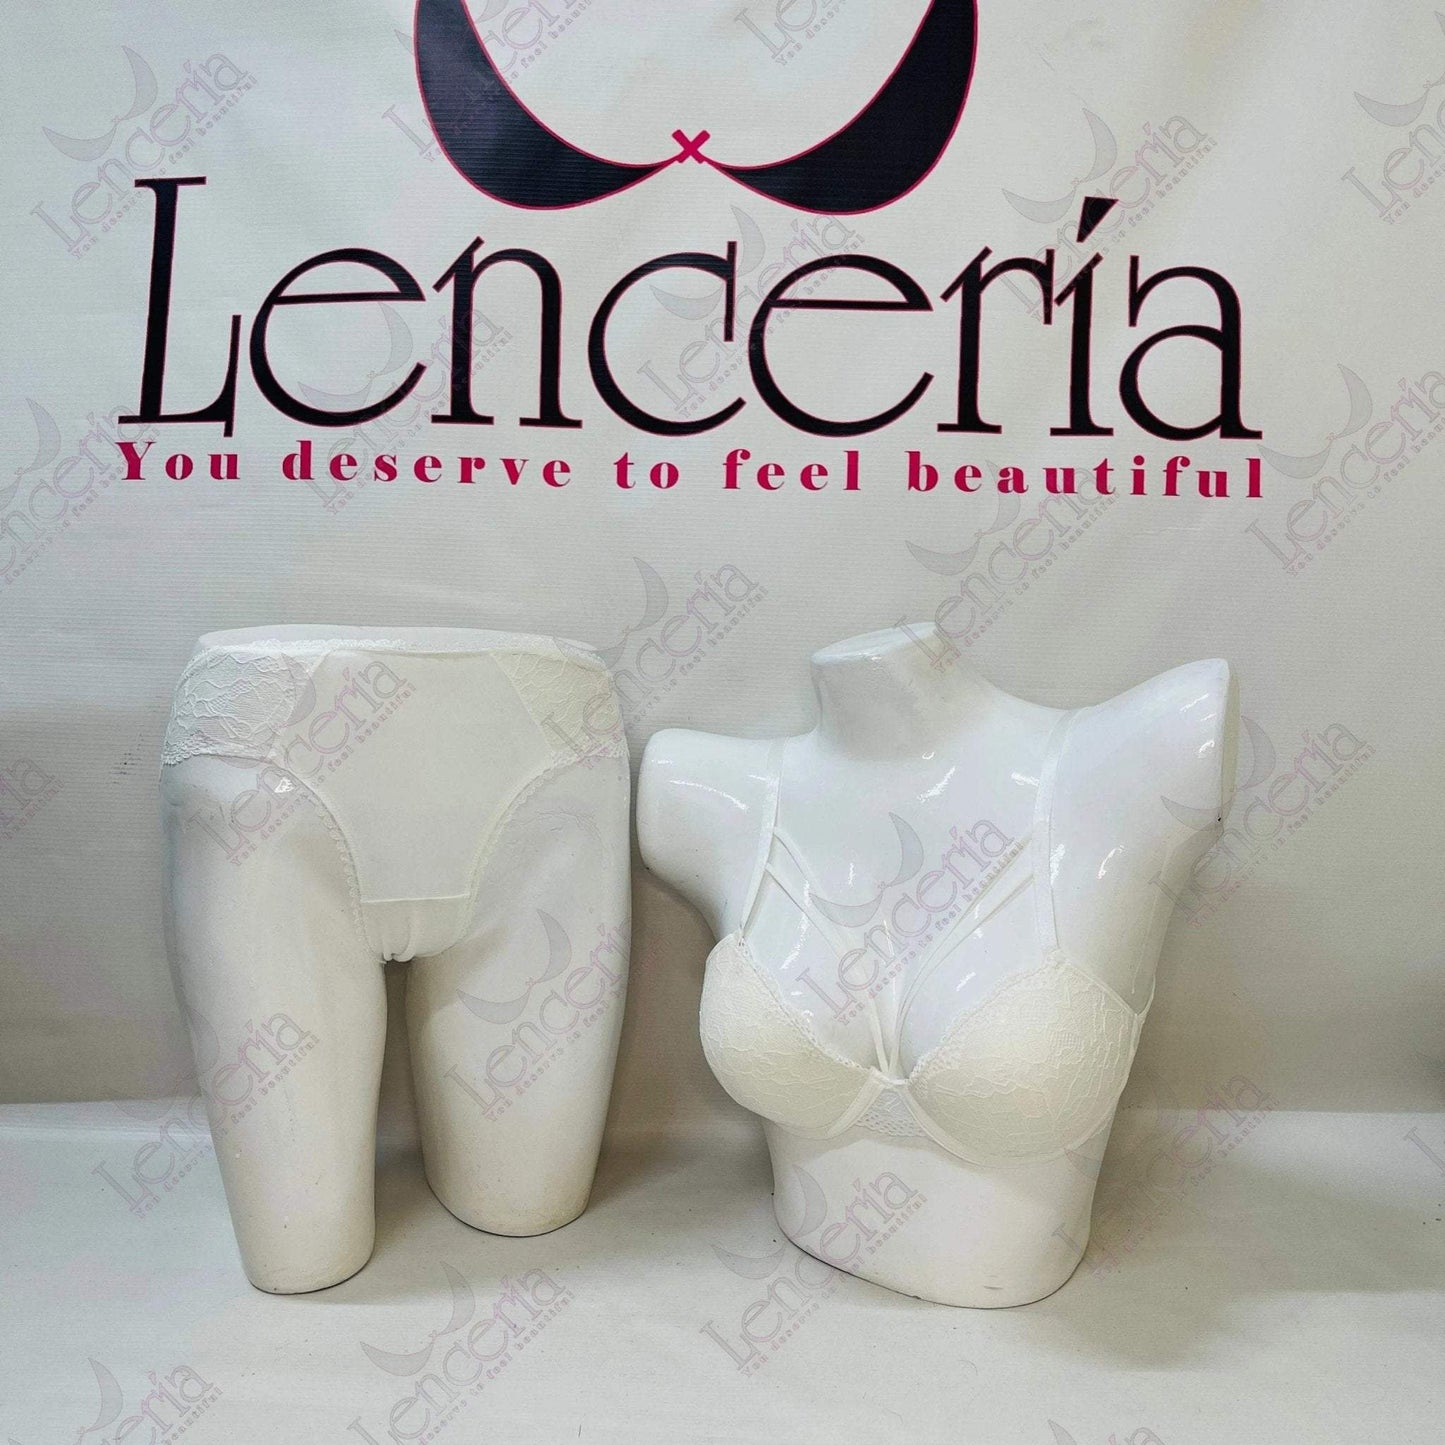 Cherie Candida lingerie set - Ultra beautiful - (c106) - Lenceria-lingerie.pk